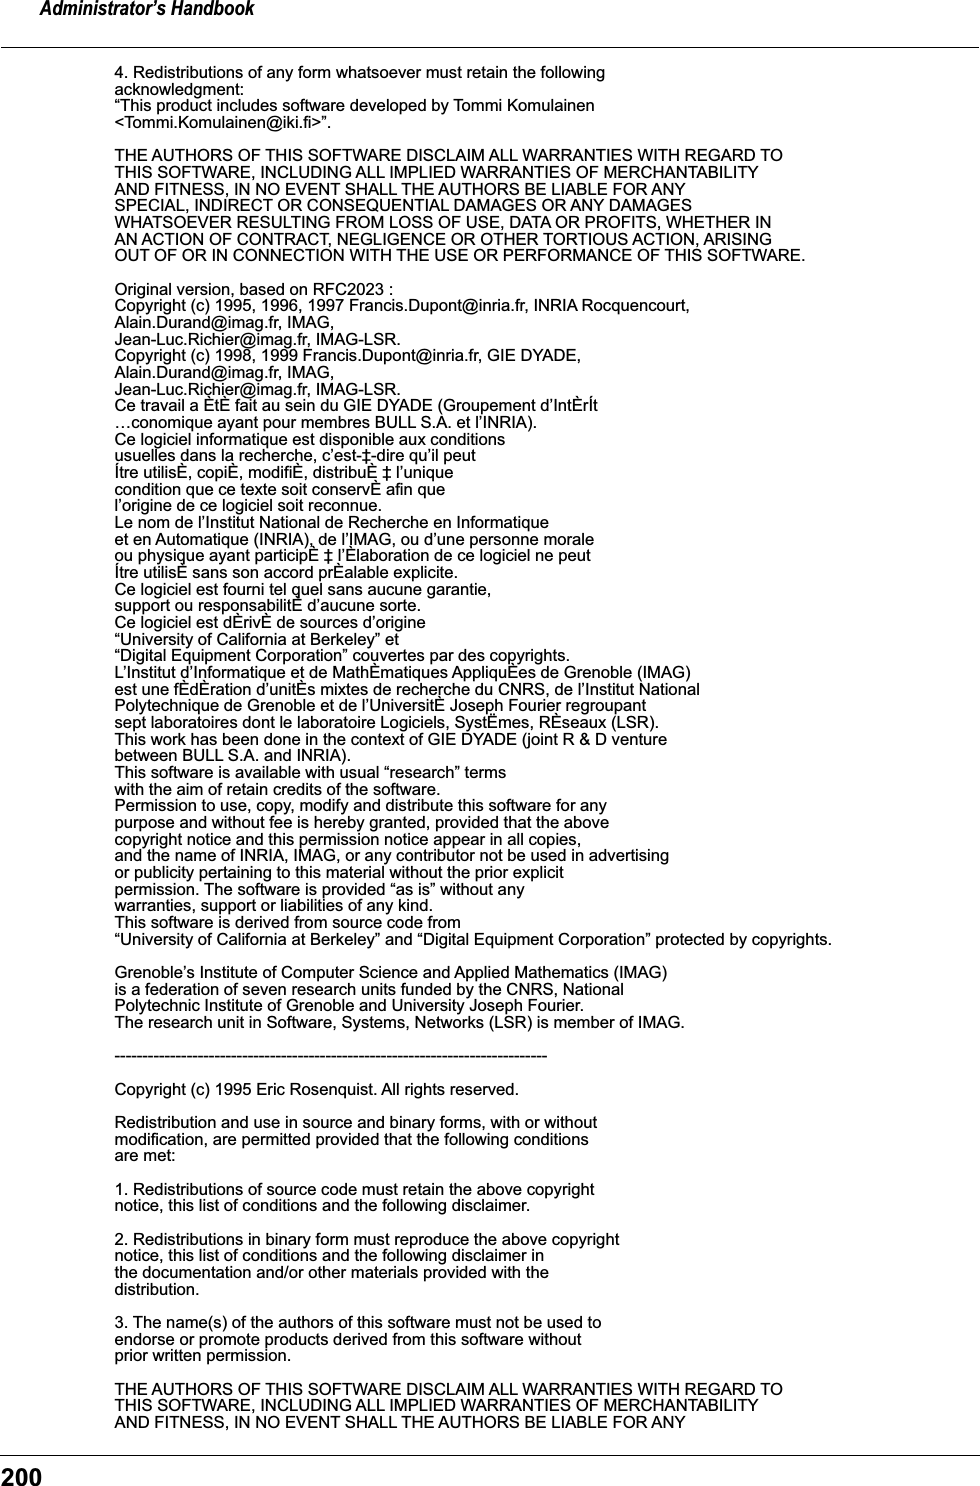 Administrator’s Handbook2004. Redistributions of any form whatsoever must retain the following acknowledgment: “This product includes software developed by Tommi Komulainen &lt;Tommi.Komulainen@iki.fi&gt;”. THE AUTHORS OF THIS SOFTWARE DISCLAIM ALL WARRANTIES WITH REGARD TO THIS SOFTWARE, INCLUDING ALL IMPLIED WARRANTIES OF MERCHANTABILITY AND FITNESS, IN NO EVENT SHALL THE AUTHORS BE LIABLE FOR ANY SPECIAL, INDIRECT OR CONSEQUENTIAL DAMAGES OR ANY DAMAGES WHATSOEVER RESULTING FROM LOSS OF USE, DATA OR PROFITS, WHETHER IN AN ACTION OF CONTRACT, NEGLIGENCE OR OTHER TORTIOUS ACTION, ARISING OUT OF OR IN CONNECTION WITH THE USE OR PERFORMANCE OF THIS SOFTWARE. Original version, based on RFC2023 : Copyright (c) 1995, 1996, 1997 Francis.Dupont@inria.fr, INRIA Rocquencourt, Alain.Durand@imag.fr, IMAG, Jean-Luc.Richier@imag.fr, IMAG-LSR. Copyright (c) 1998, 1999 Francis.Dupont@inria.fr, GIE DYADE, Alain.Durand@imag.fr, IMAG, Jean-Luc.Richier@imag.fr, IMAG-LSR. Ce travail a ÈtÈ fait au sein du GIE DYADE (Groupement d’IntÈrÍt …conomique ayant pour membres BULL S.A. et l’INRIA). Ce logiciel informatique est disponible aux conditions usuelles dans la recherche, c’est-‡-dire qu’il peut Ítre utilisÈ, copiÈ, modifiÈ, distribuÈ ‡ l’unique condition que ce texte soit conservÈ afin quel’origine de ce logiciel soit reconnue. Le nom de l’Institut National de Recherche en Informatique et en Automatique (INRIA), de l’IMAG, ou d’une personne morale ou physique ayant participÈ ‡ l’Èlaboration de ce logiciel ne peut Ítre utilisÈ sans son accord prÈalable explicite. Ce logiciel est fourni tel quel sans aucune garantie, support ou responsabilitÈ d’aucune sorte. Ce logiciel est dÈrivÈ de sources d’origine “University of California at Berkeley” et “Digital Equipment Corporation” couvertes par des copyrights. L’Institut d’Informatique et de MathÈmatiques AppliquÈes de Grenoble (IMAG) est une fÈdÈration d’unitÈs mixtes de recherche du CNRS, de l’Institut National Polytechnique de Grenoble et de l’UniversitÈ Joseph Fourier regroupant sept laboratoires dont le laboratoire Logiciels, SystËmes, RÈseaux (LSR). This work has been done in the context of GIE DYADE (joint R &amp; D venture between BULL S.A. and INRIA). This software is available with usual “research” terms with the aim of retain credits of the software. Permission to use, copy, modify and distribute this software for any purpose and without fee is hereby granted, provided that the above copyright notice and this permission notice appear in all copies, and the name of INRIA, IMAG, or any contributor not be used in advertising or publicity pertaining to this material without the prior explicit permission. The software is provided “as is” without any warranties, support or liabilities of any kind. This software is derived from source code from “University of California at Berkeley” and “Digital Equipment Corporation” protected by copyrights. Grenoble’s Institute of Computer Science and Applied Mathematics (IMAG) is a federation of seven research units funded by the CNRS, National Polytechnic Institute of Grenoble and University Joseph Fourier. The research unit in Software, Systems, Networks (LSR) is member of IMAG. ------------------------------------------------------------------------------ Copyright (c) 1995 Eric Rosenquist. All rights reserved. Redistribution and use in source and binary forms, with or without modification, are permitted provided that the following conditions are met: 1. Redistributions of source code must retain the above copyright notice, this list of conditions and the following disclaimer. 2. Redistributions in binary form must reproduce the above copyright notice, this list of conditions and the following disclaimer in the documentation and/or other materials provided with the distribution. 3. The name(s) of the authors of this software must not be used to endorse or promote products derived from this software without prior written permission. THE AUTHORS OF THIS SOFTWARE DISCLAIM ALL WARRANTIES WITH REGARD TO THIS SOFTWARE, INCLUDING ALL IMPLIED WARRANTIES OF MERCHANTABILITY AND FITNESS, IN NO EVENT SHALL THE AUTHORS BE LIABLE FOR ANY 